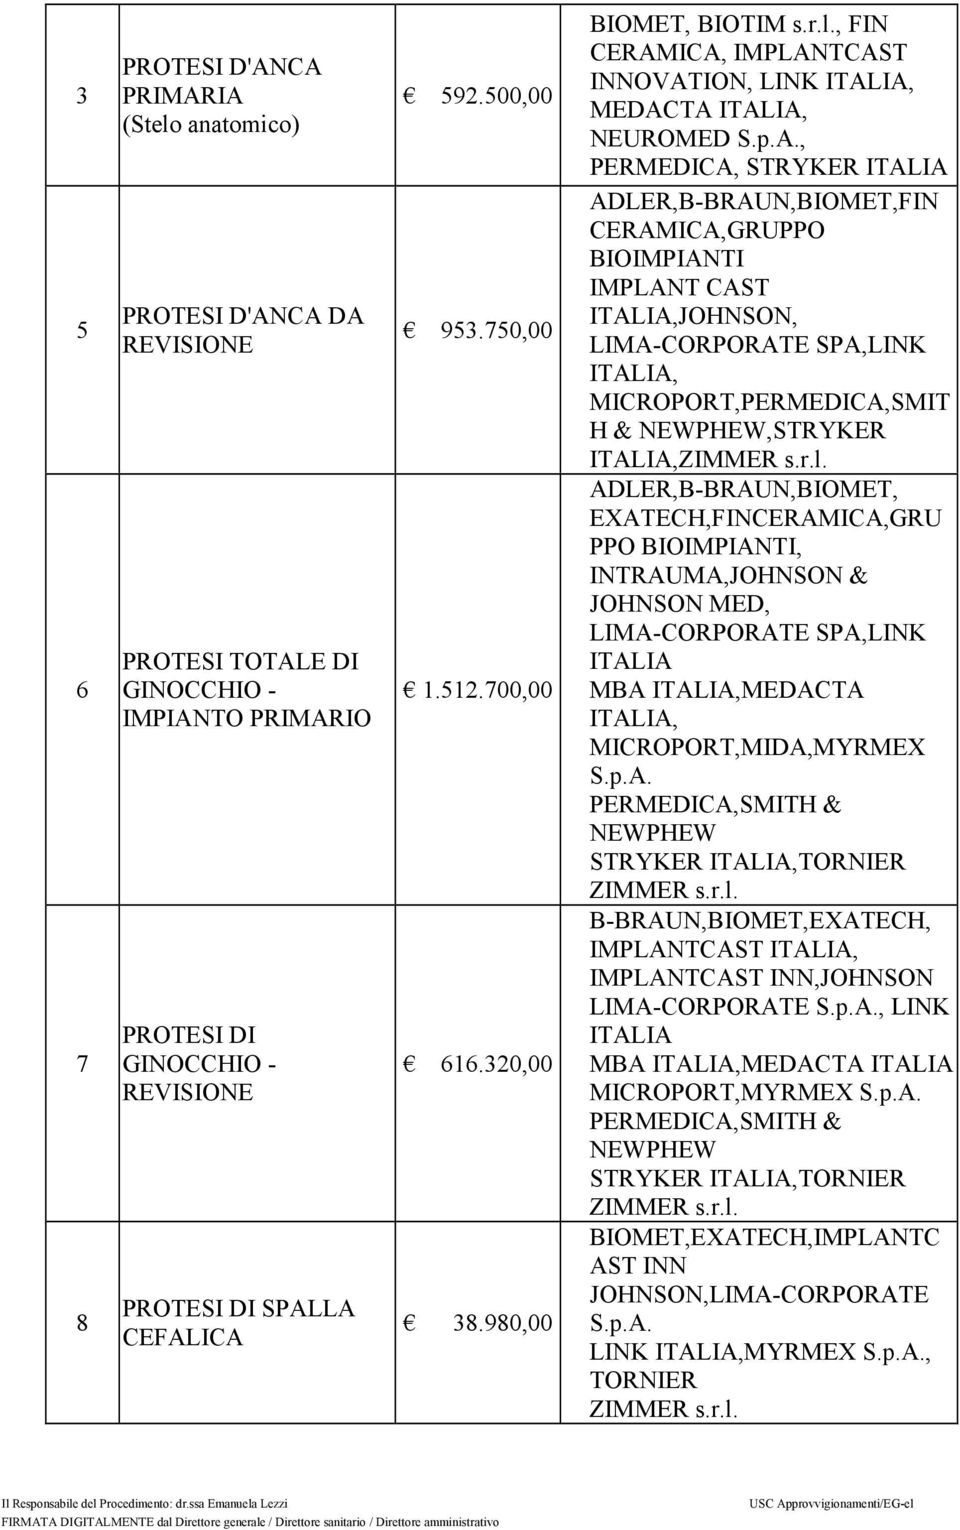 ICA, IMPLANTCAST INNOVATION, LINK ITALIA, MEDACTA ITALIA, NEUROMED S.p.A., PERMEDICA, STRYKER ITALIA ADLER,B-BRAUN,BIOMET,FIN CERAMICA,GRUPPO BIOIMPIANTI IMPLANT CAST ITALIA,JOHNSON, LIMA-CORPORATE